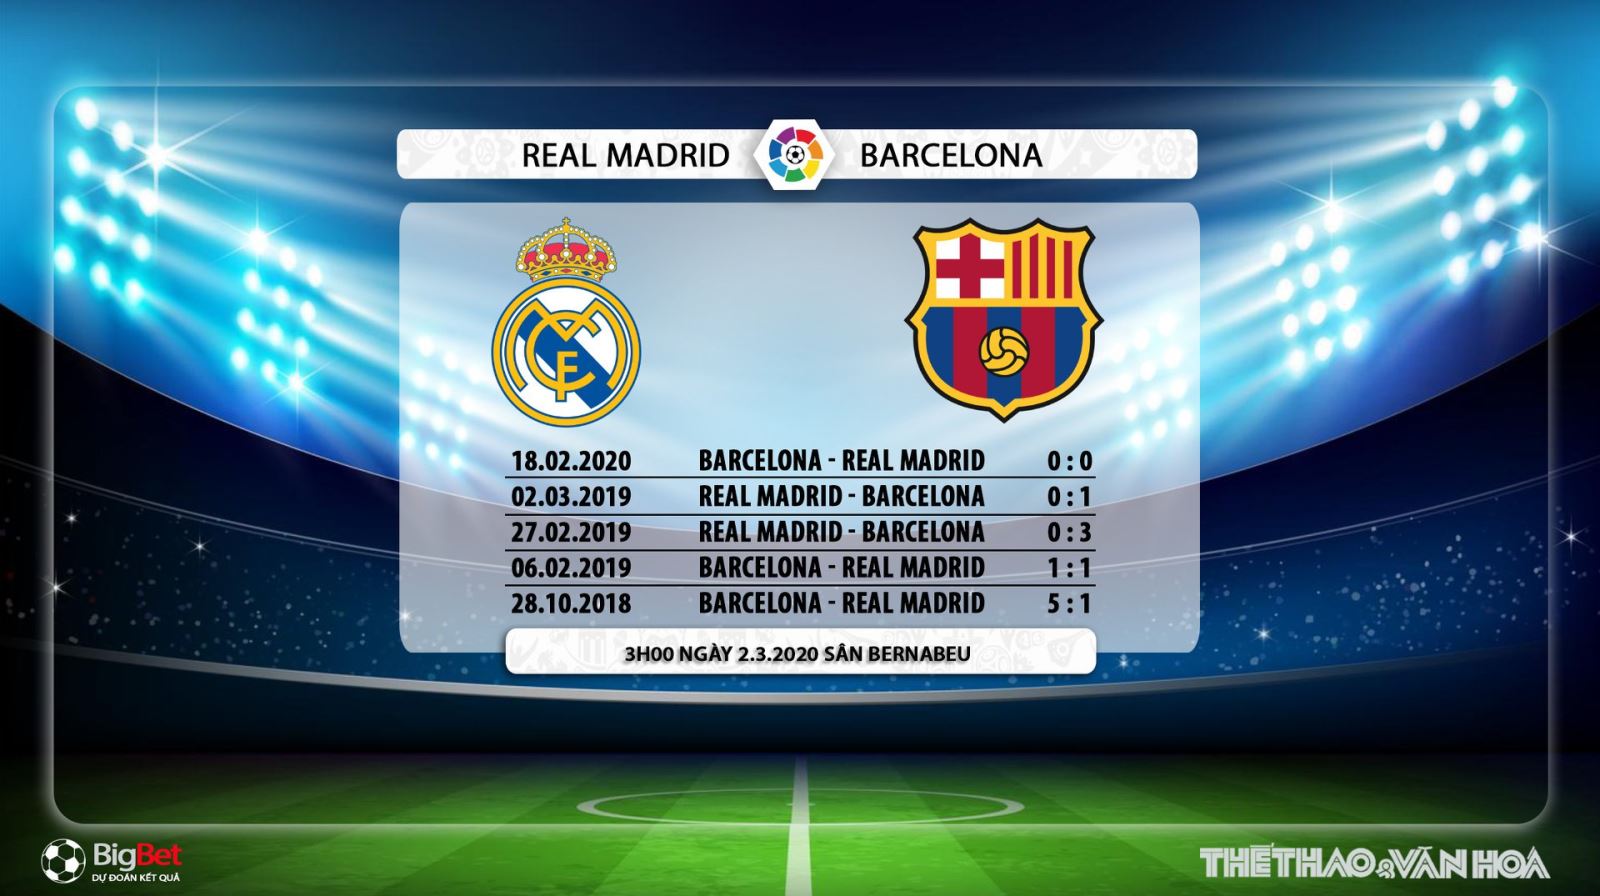 Real Madrid vs Barcelona, Real Madrid, Barca, Barcelona, nhận định Real Madrid vs Barcelona, kinh dien, trực tiếp Real Madrid vs Barcelona, soi kèo Real Madrid vs Barcelona, BĐTV, SSPORT